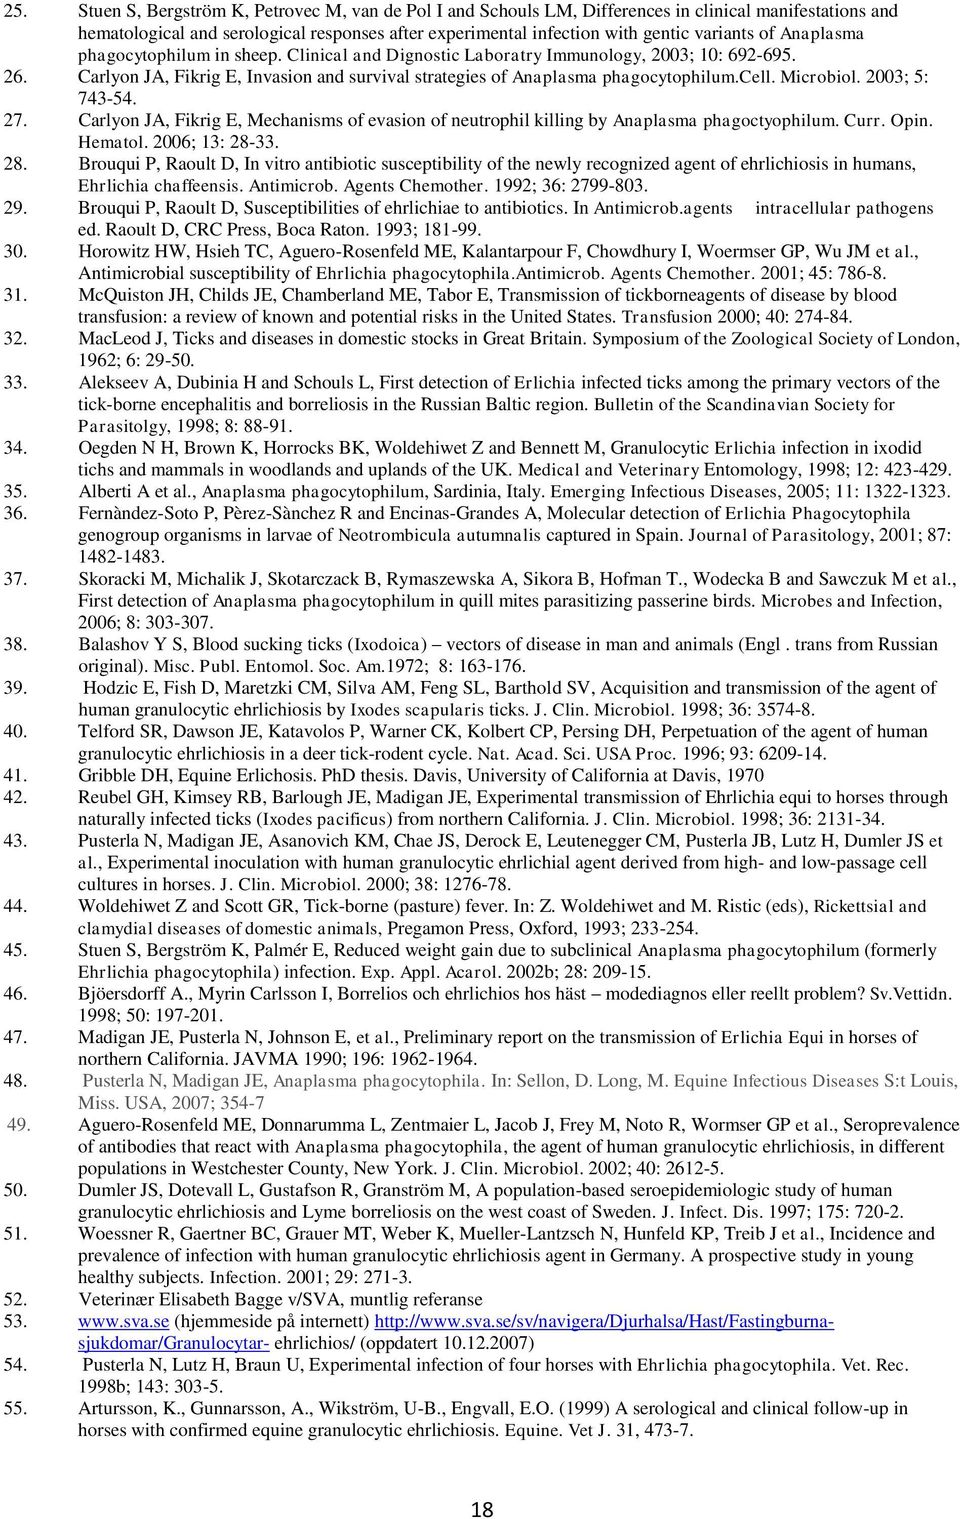 Microbiol. 2003; 5: 743-54. 27. Carlyon JA, Fikrig E, Mechanisms of evasion of neutrophil killing by Anaplasma phagoctyophilum. Curr. Opin. Hematol. 2006; 13: 28-